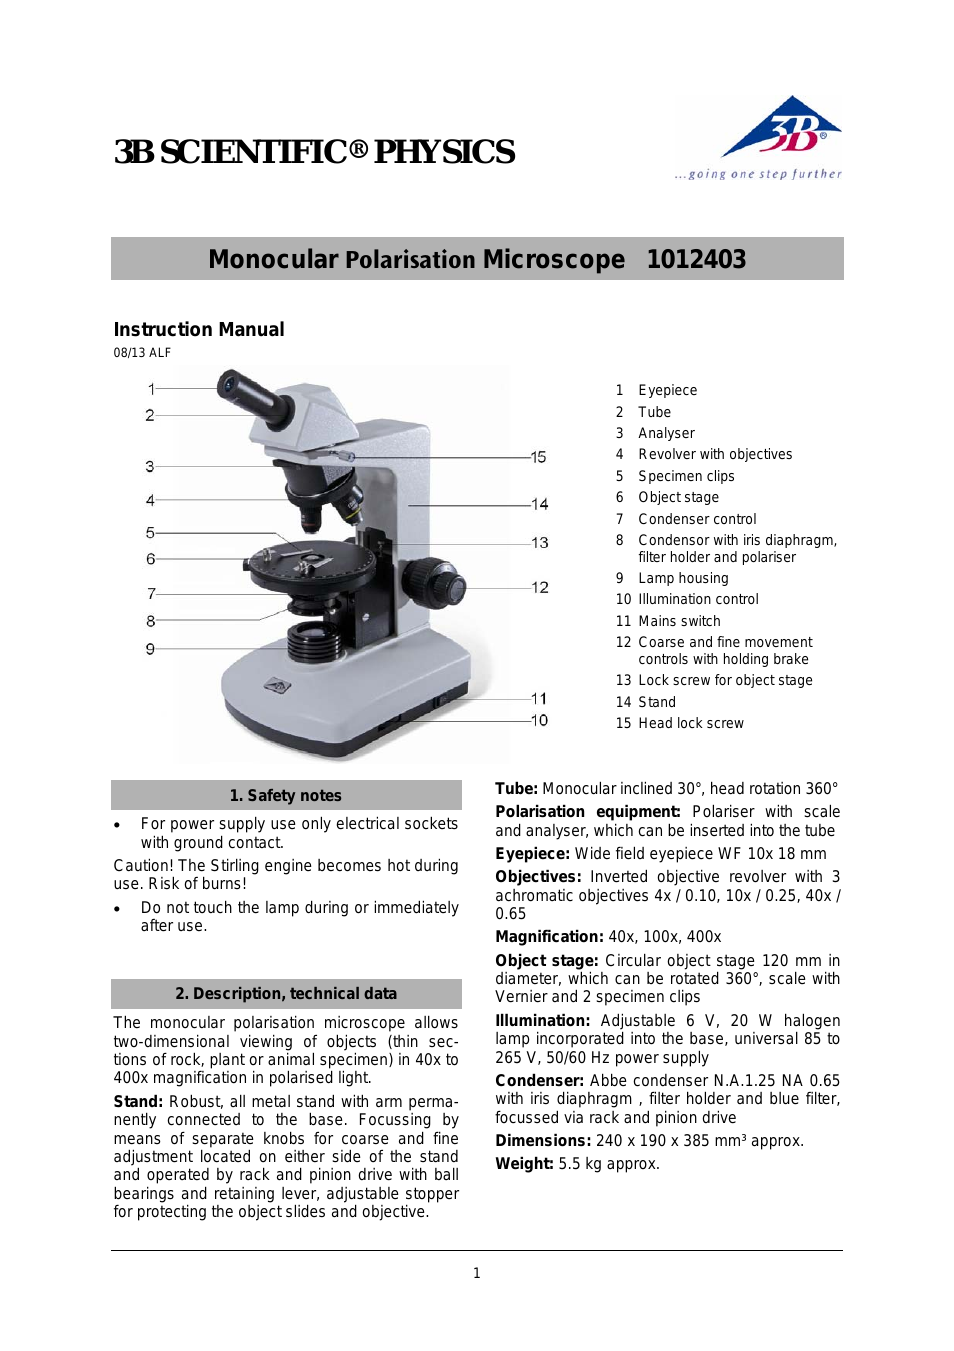 Monocular Polarizing Microscope